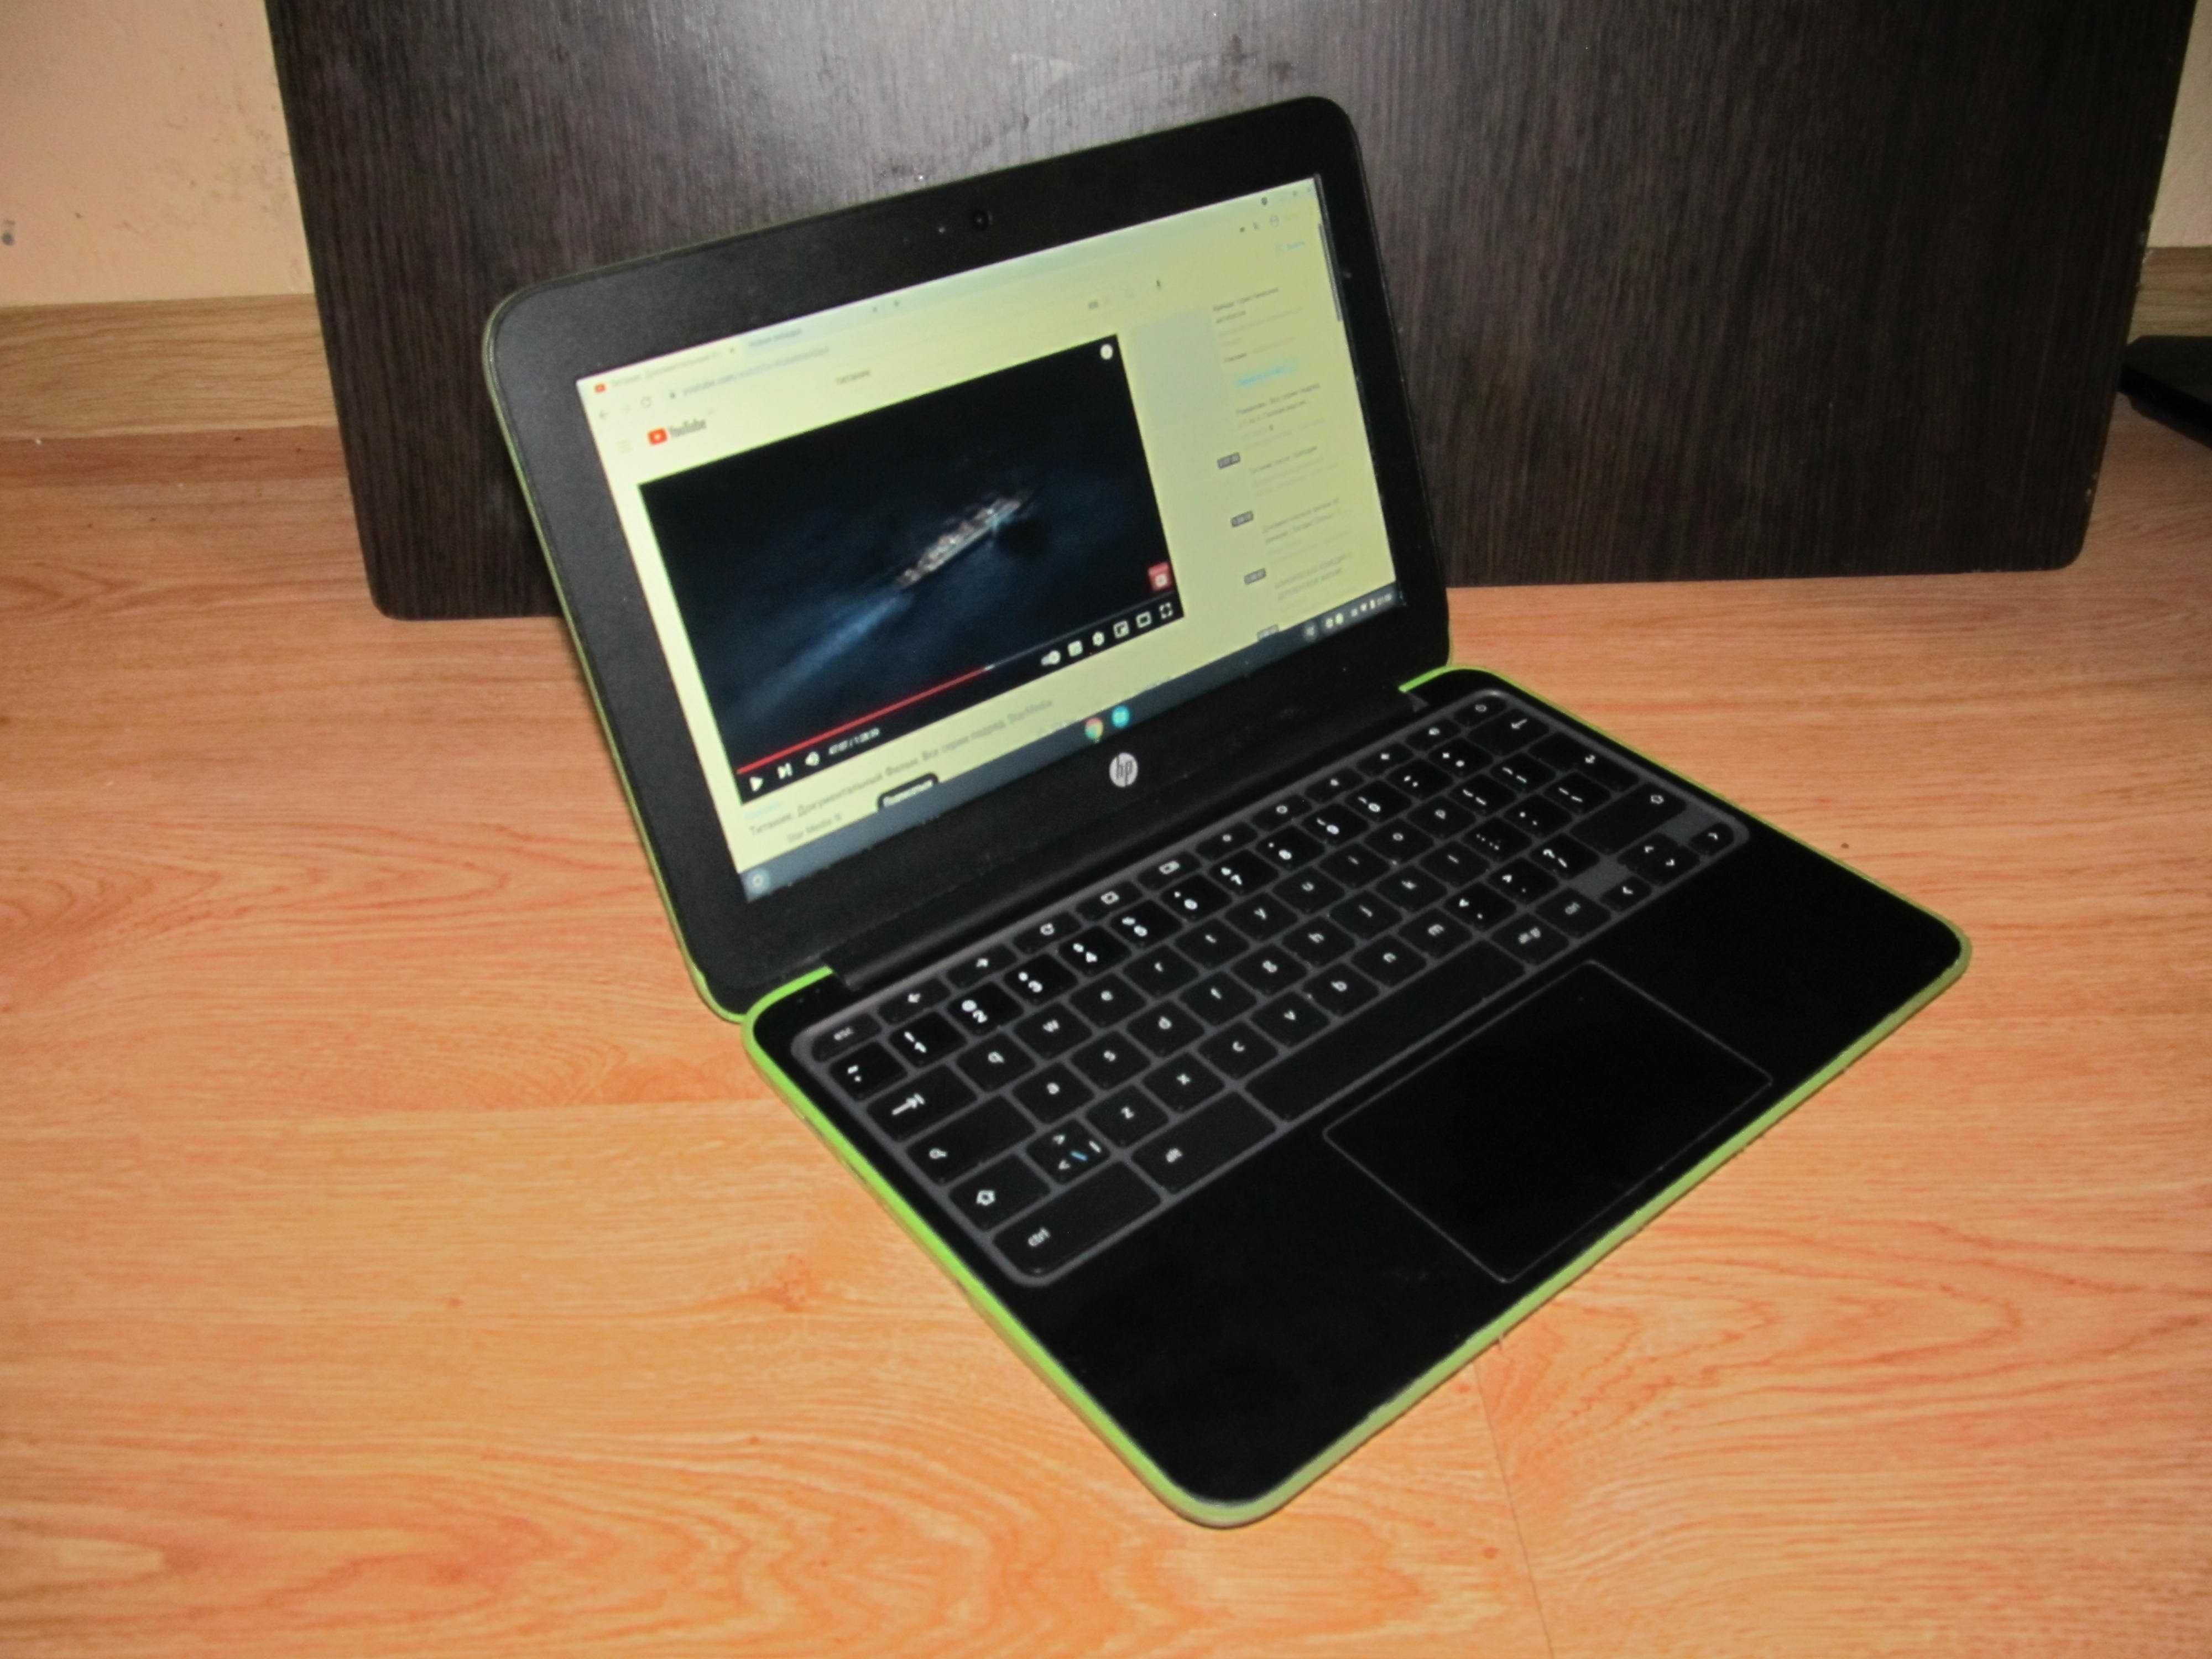 Ноутбук нетбук хромбук HP 11 дюйм Озу 4гб/16гб SSD Chromebook